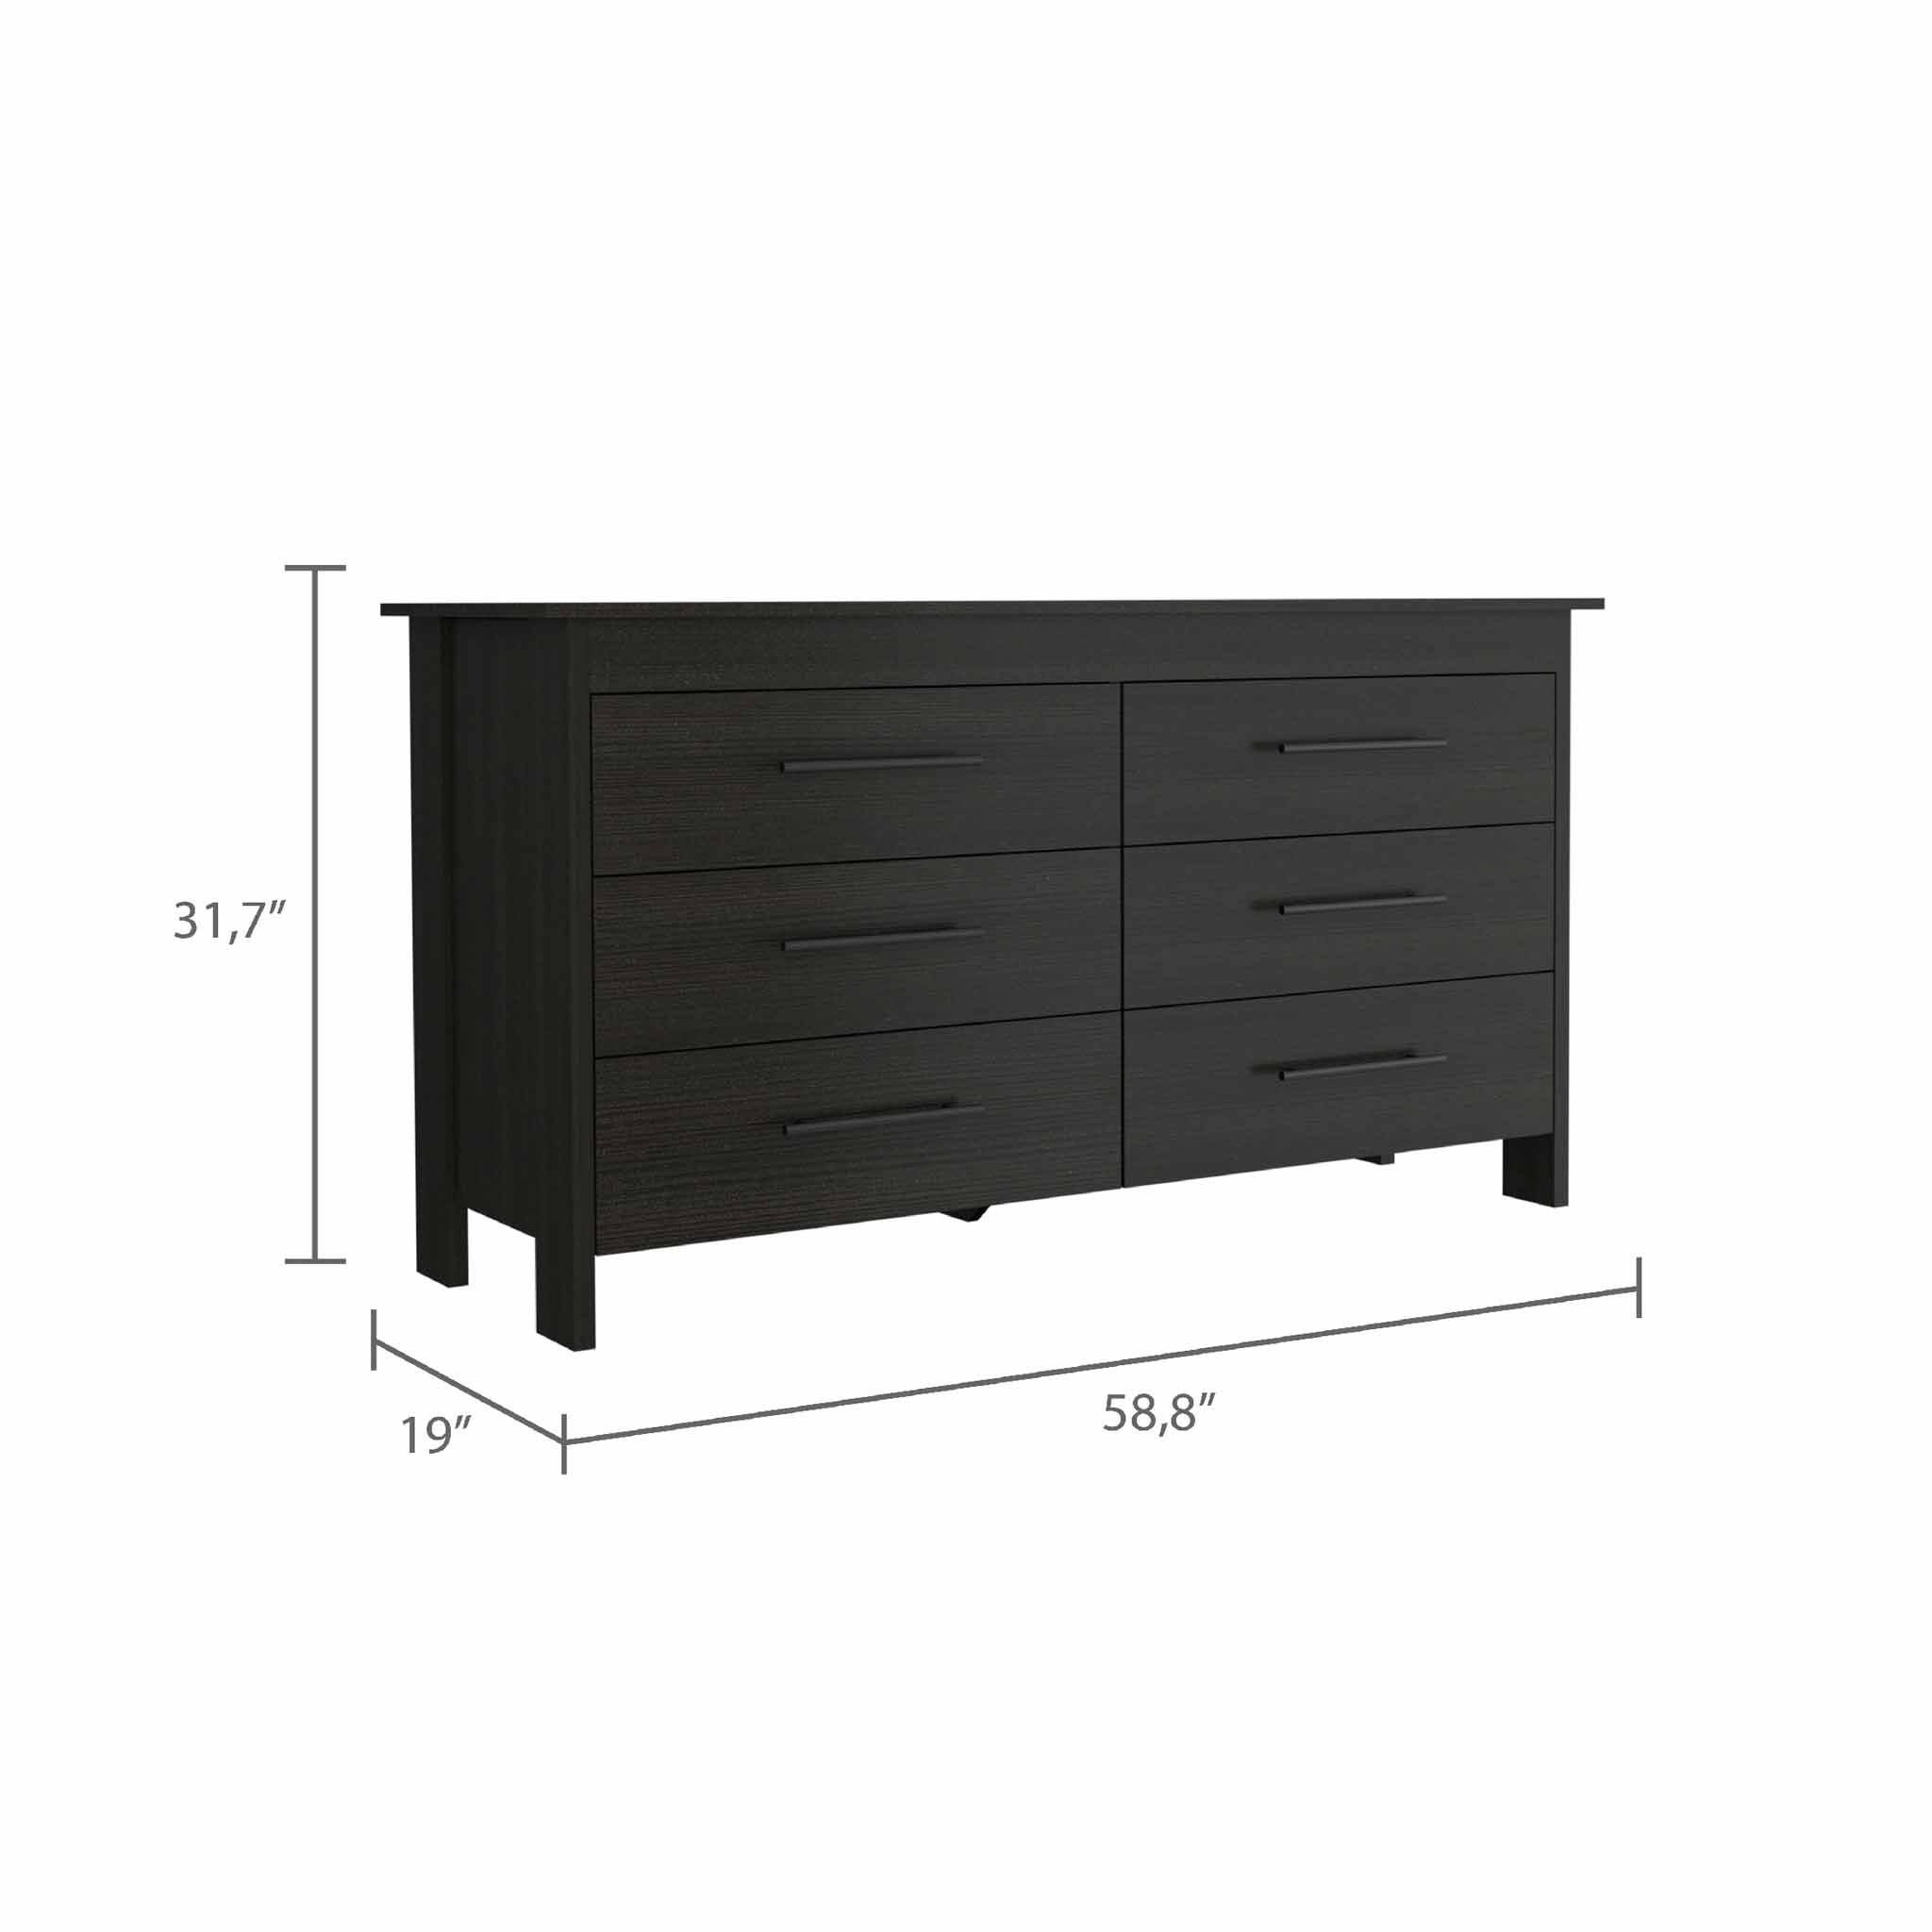 58" Black Six Drawer Double Dresser